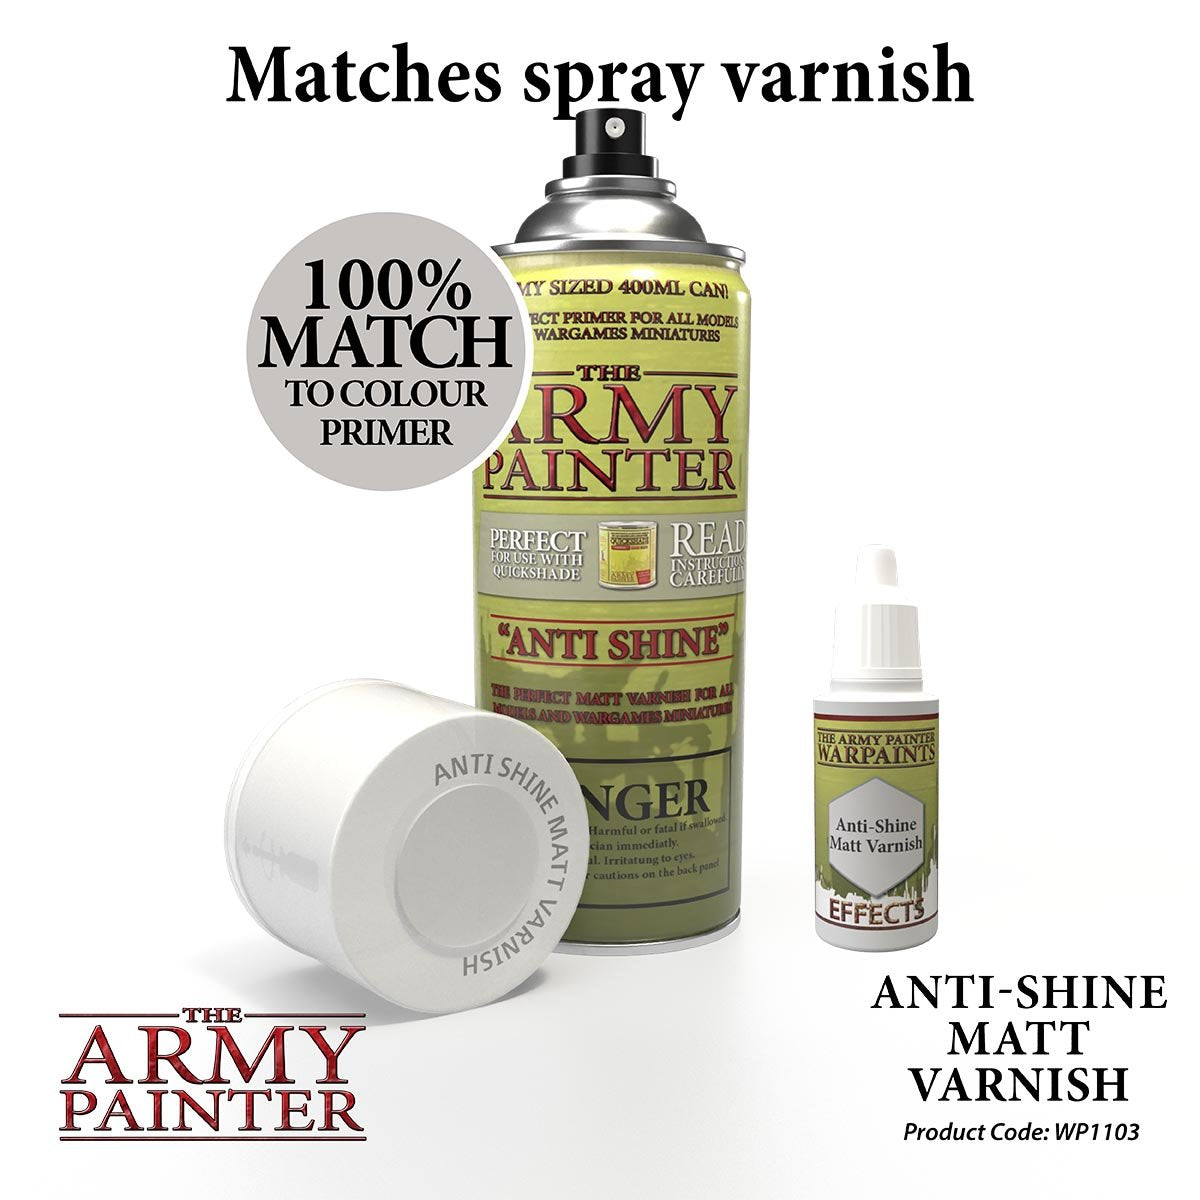 The Army Painter Warpaints WP1103 Anti-Shine Matt Varnish Acrylic Paint 18ml bottle